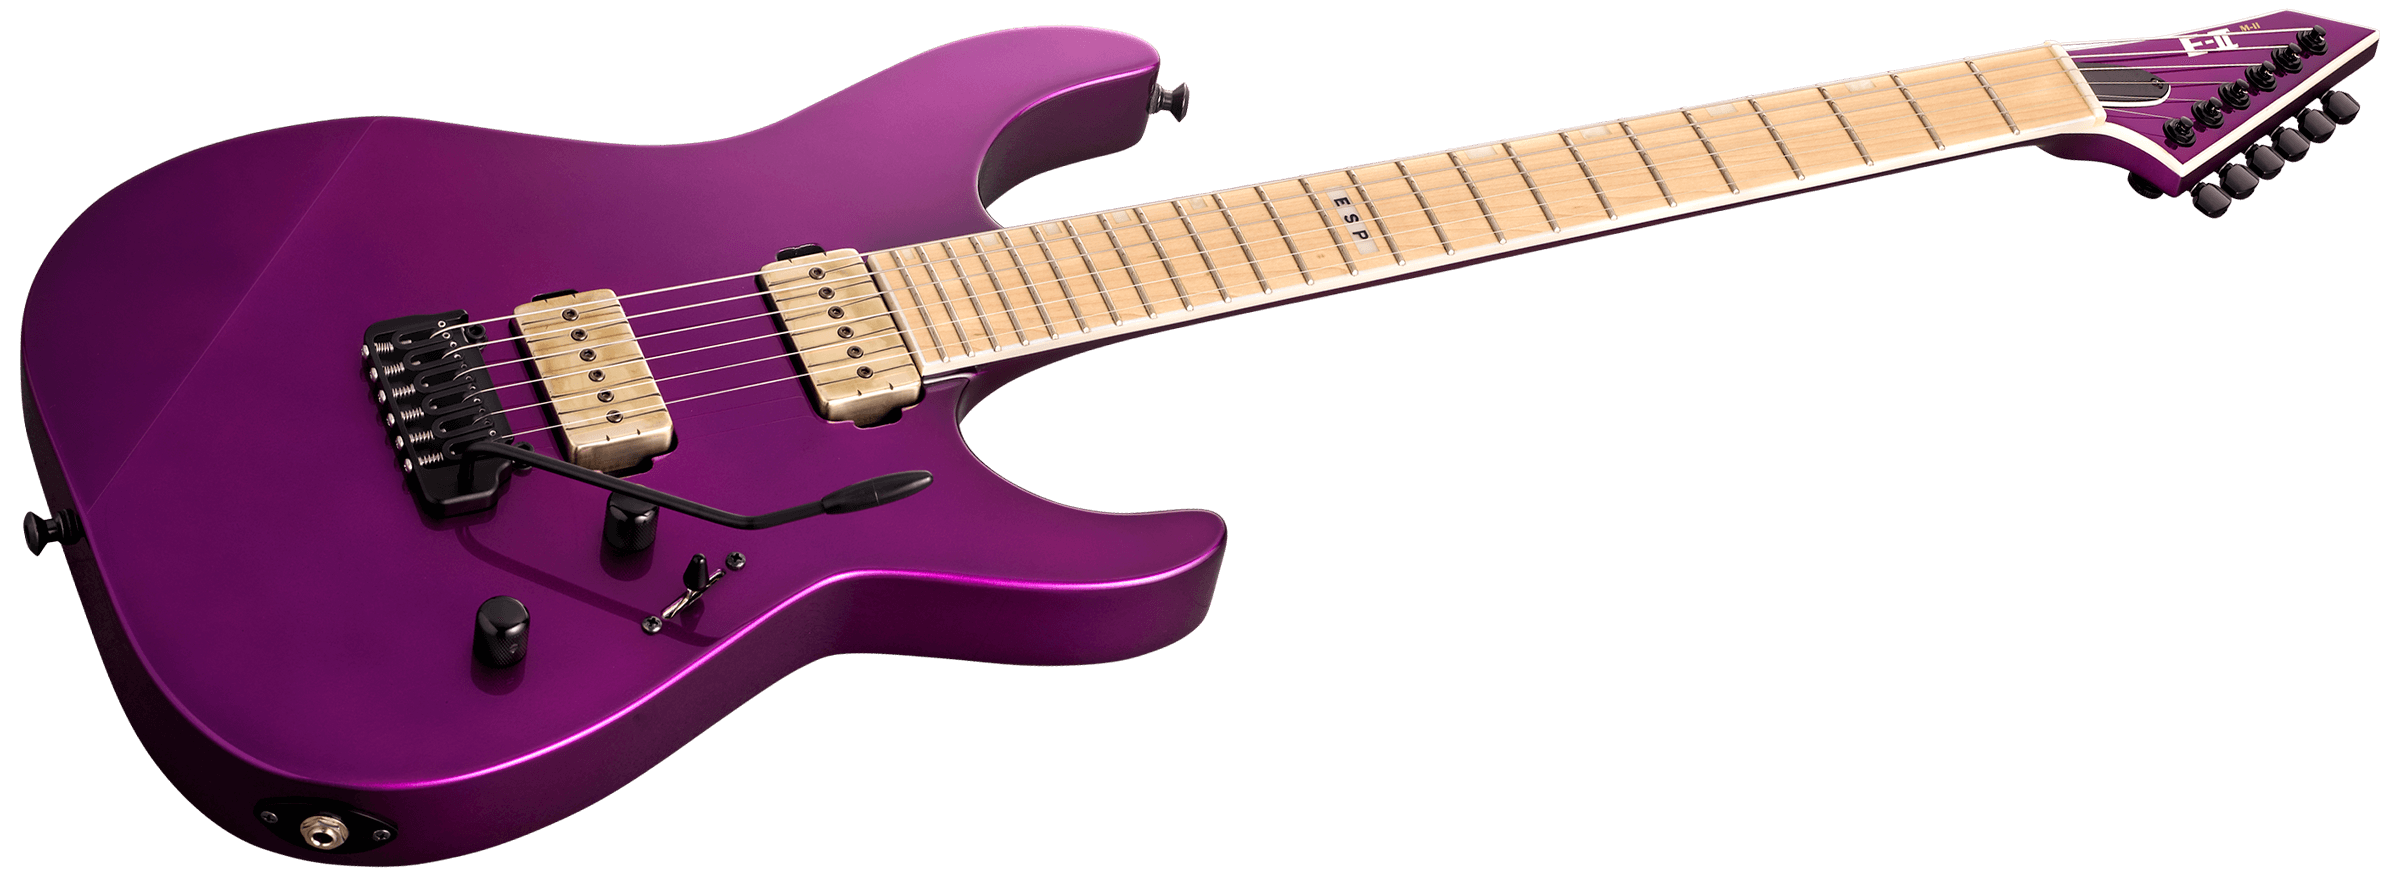 Esp E-ii Mii Hst P Jap 2s P90 Bare Knuckle Trem Mn - Voodoo Purple - Guitarra eléctrica con forma de str. - Variation 2